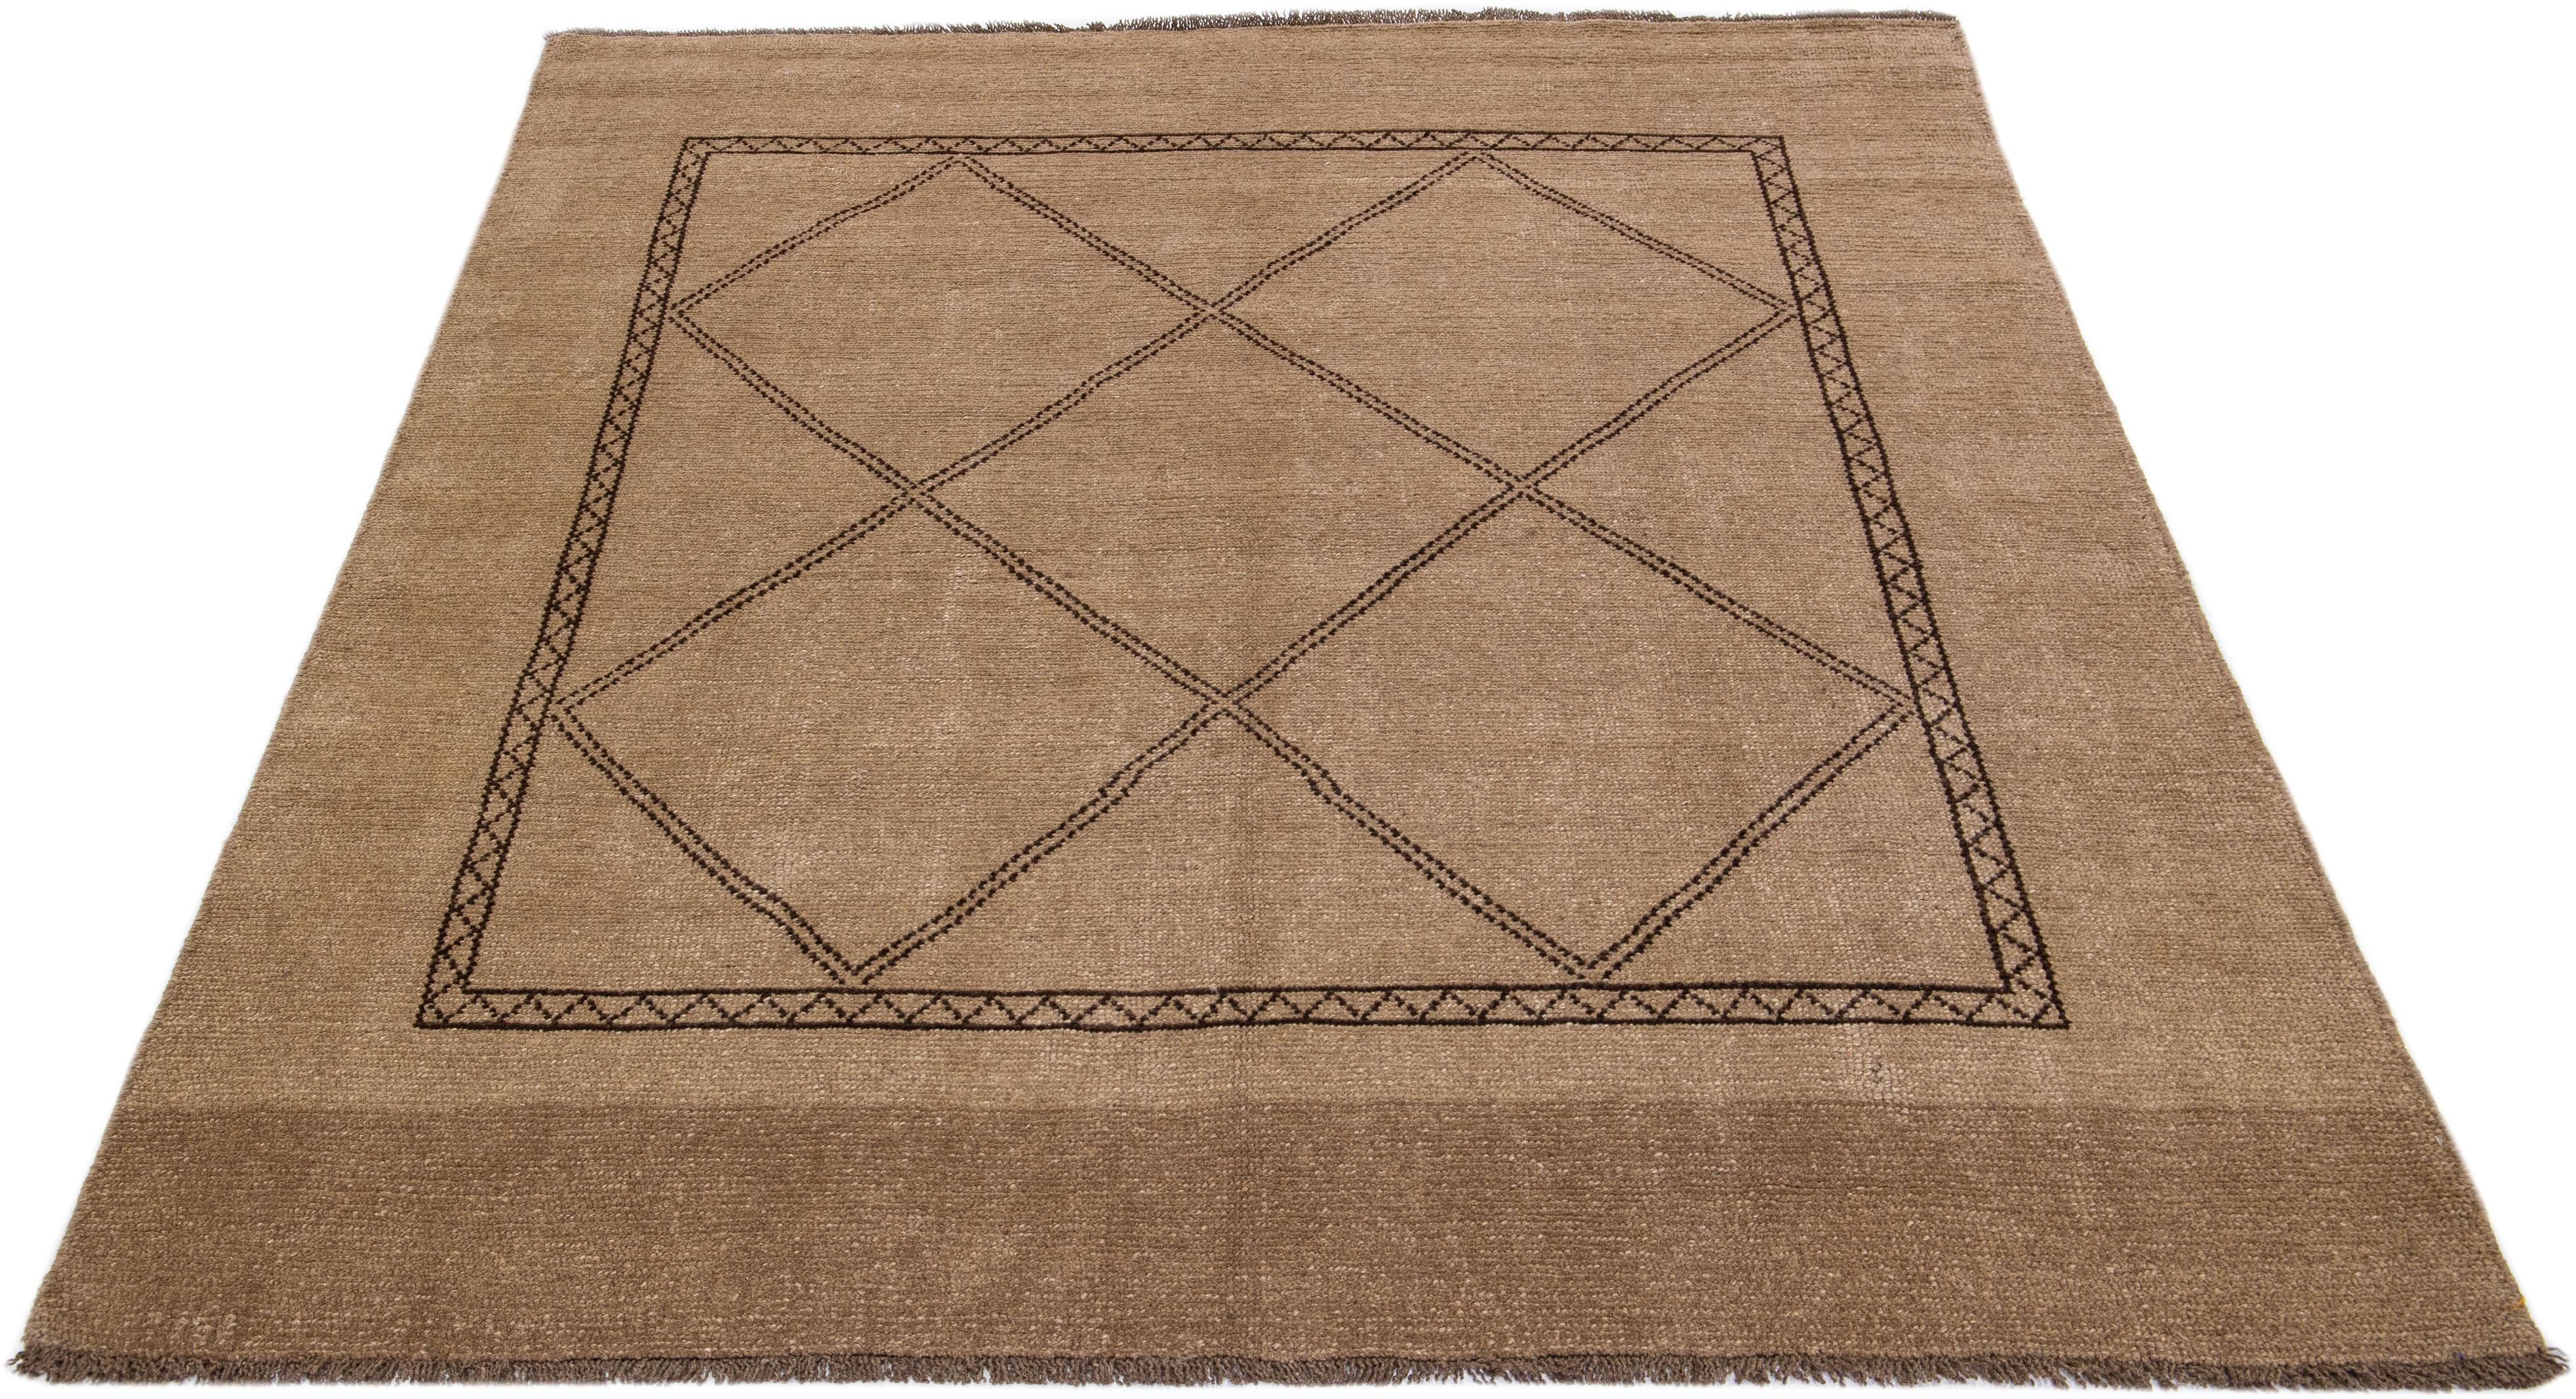 Afghan Modern Moroccan Style Brown Handmade Geometric Square Wool Rug by Apadana For Sale